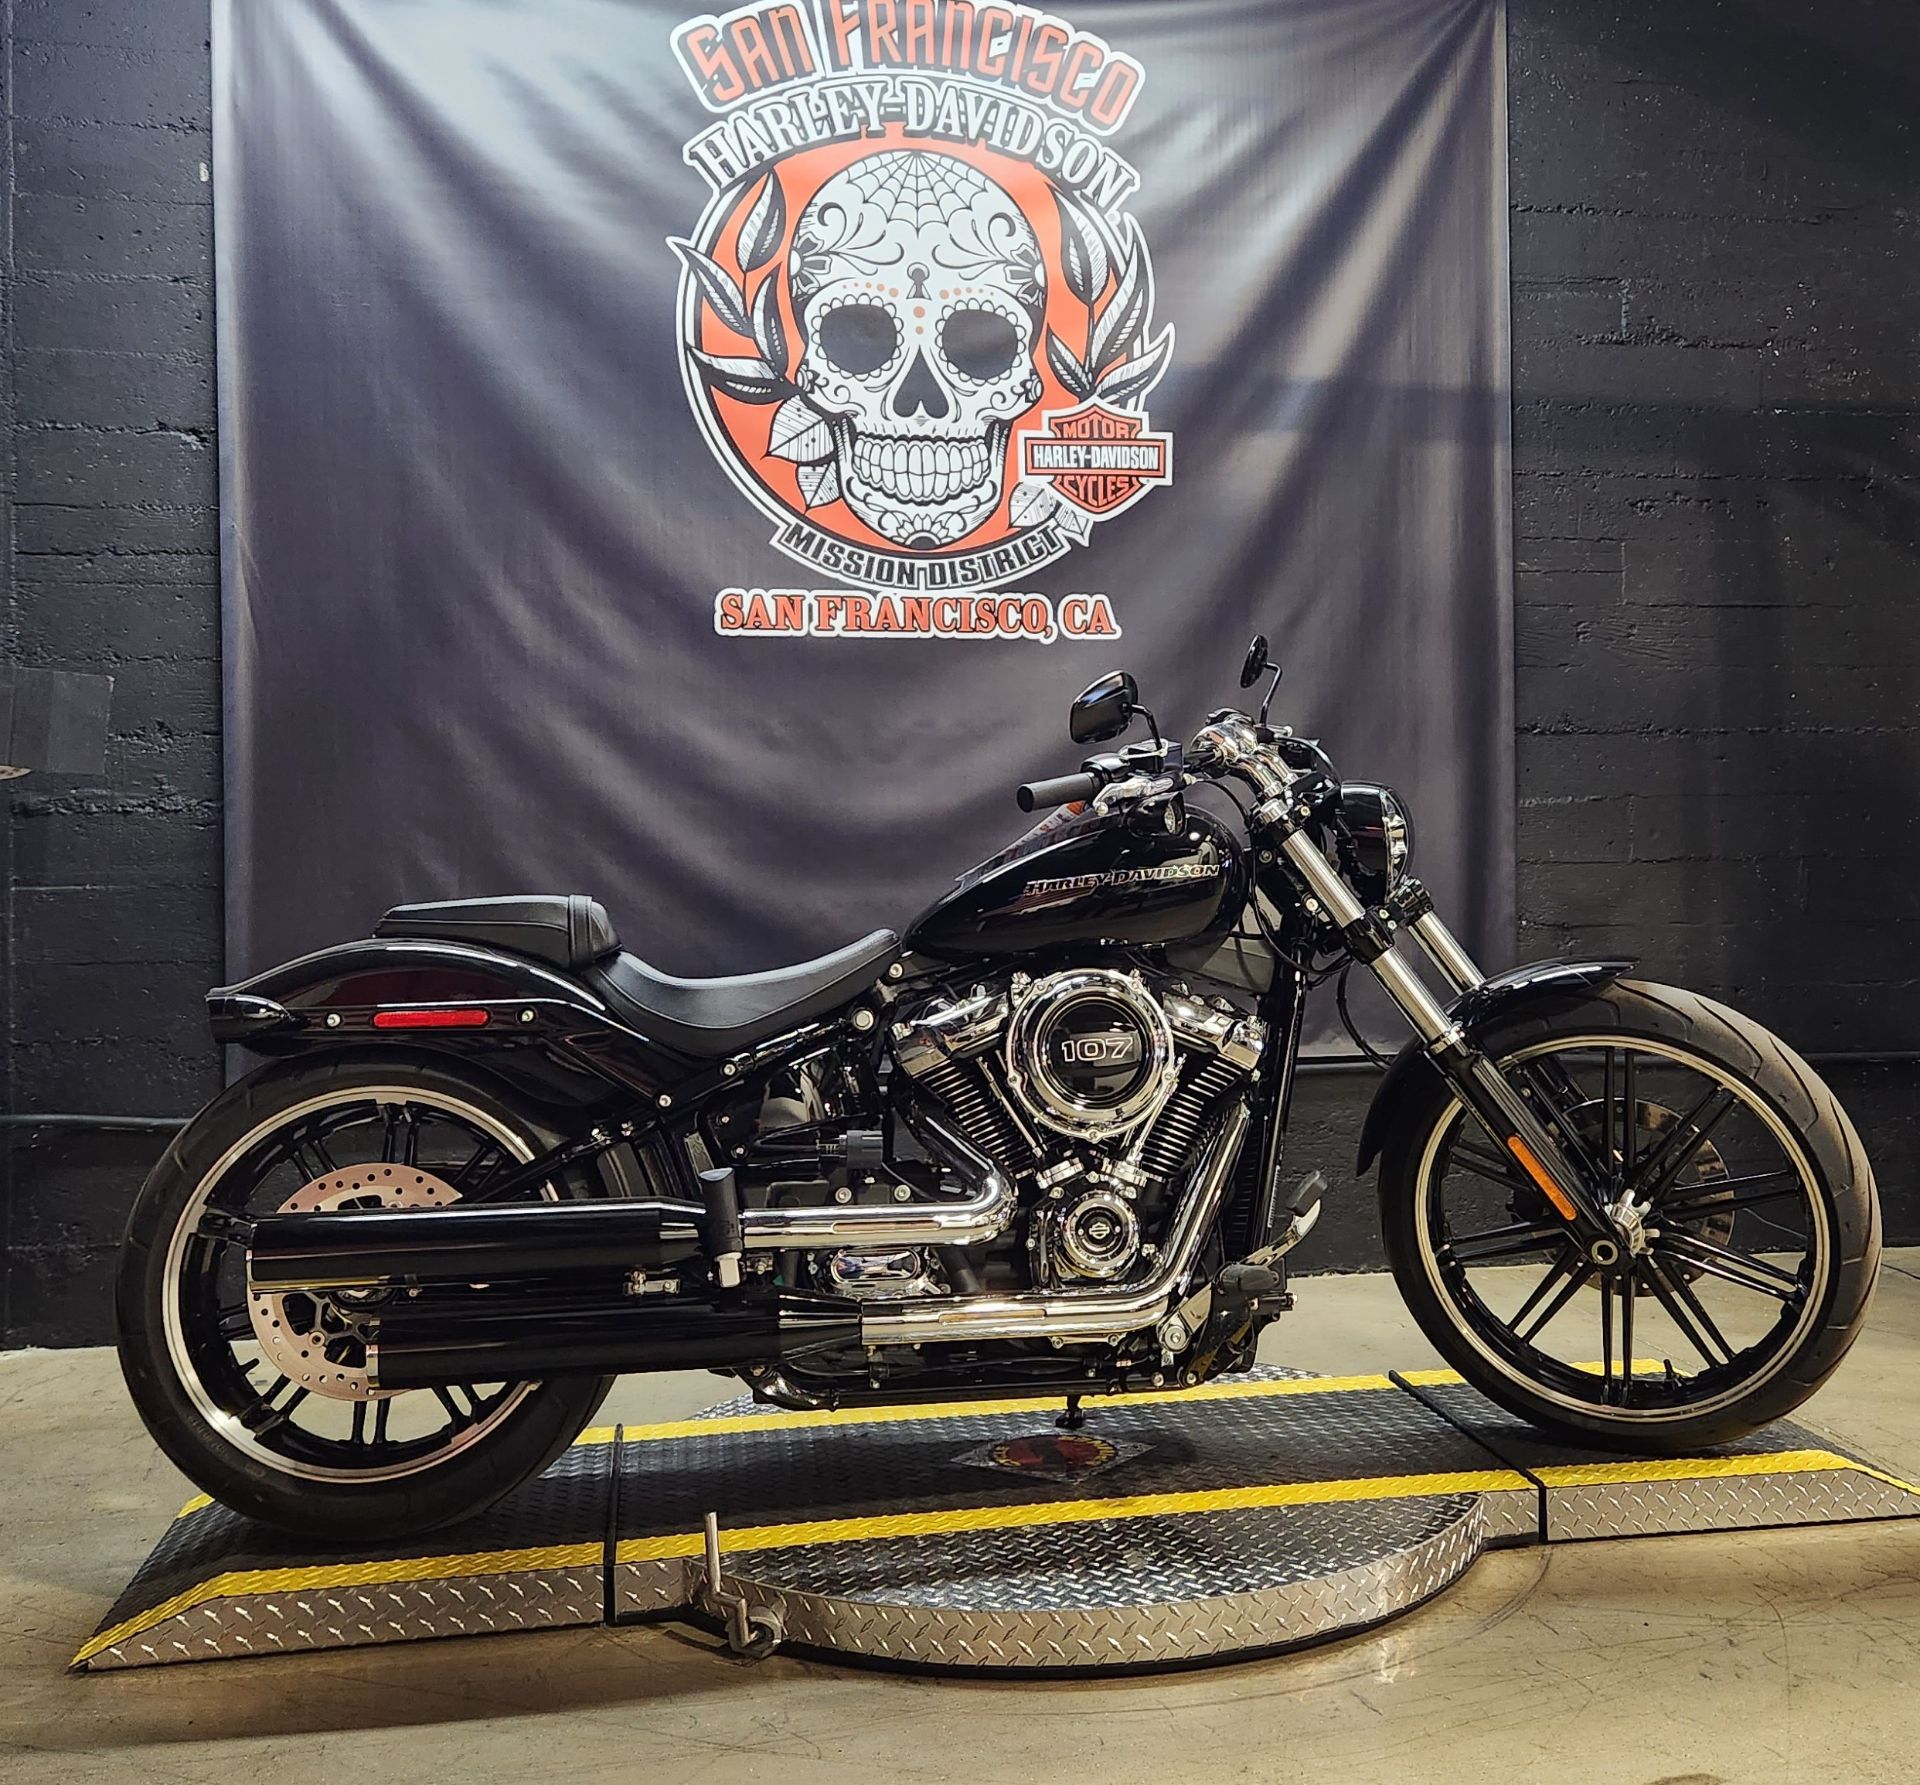 2019 Harley-Davidson Breakout® 107 in San Francisco, California - Photo 3